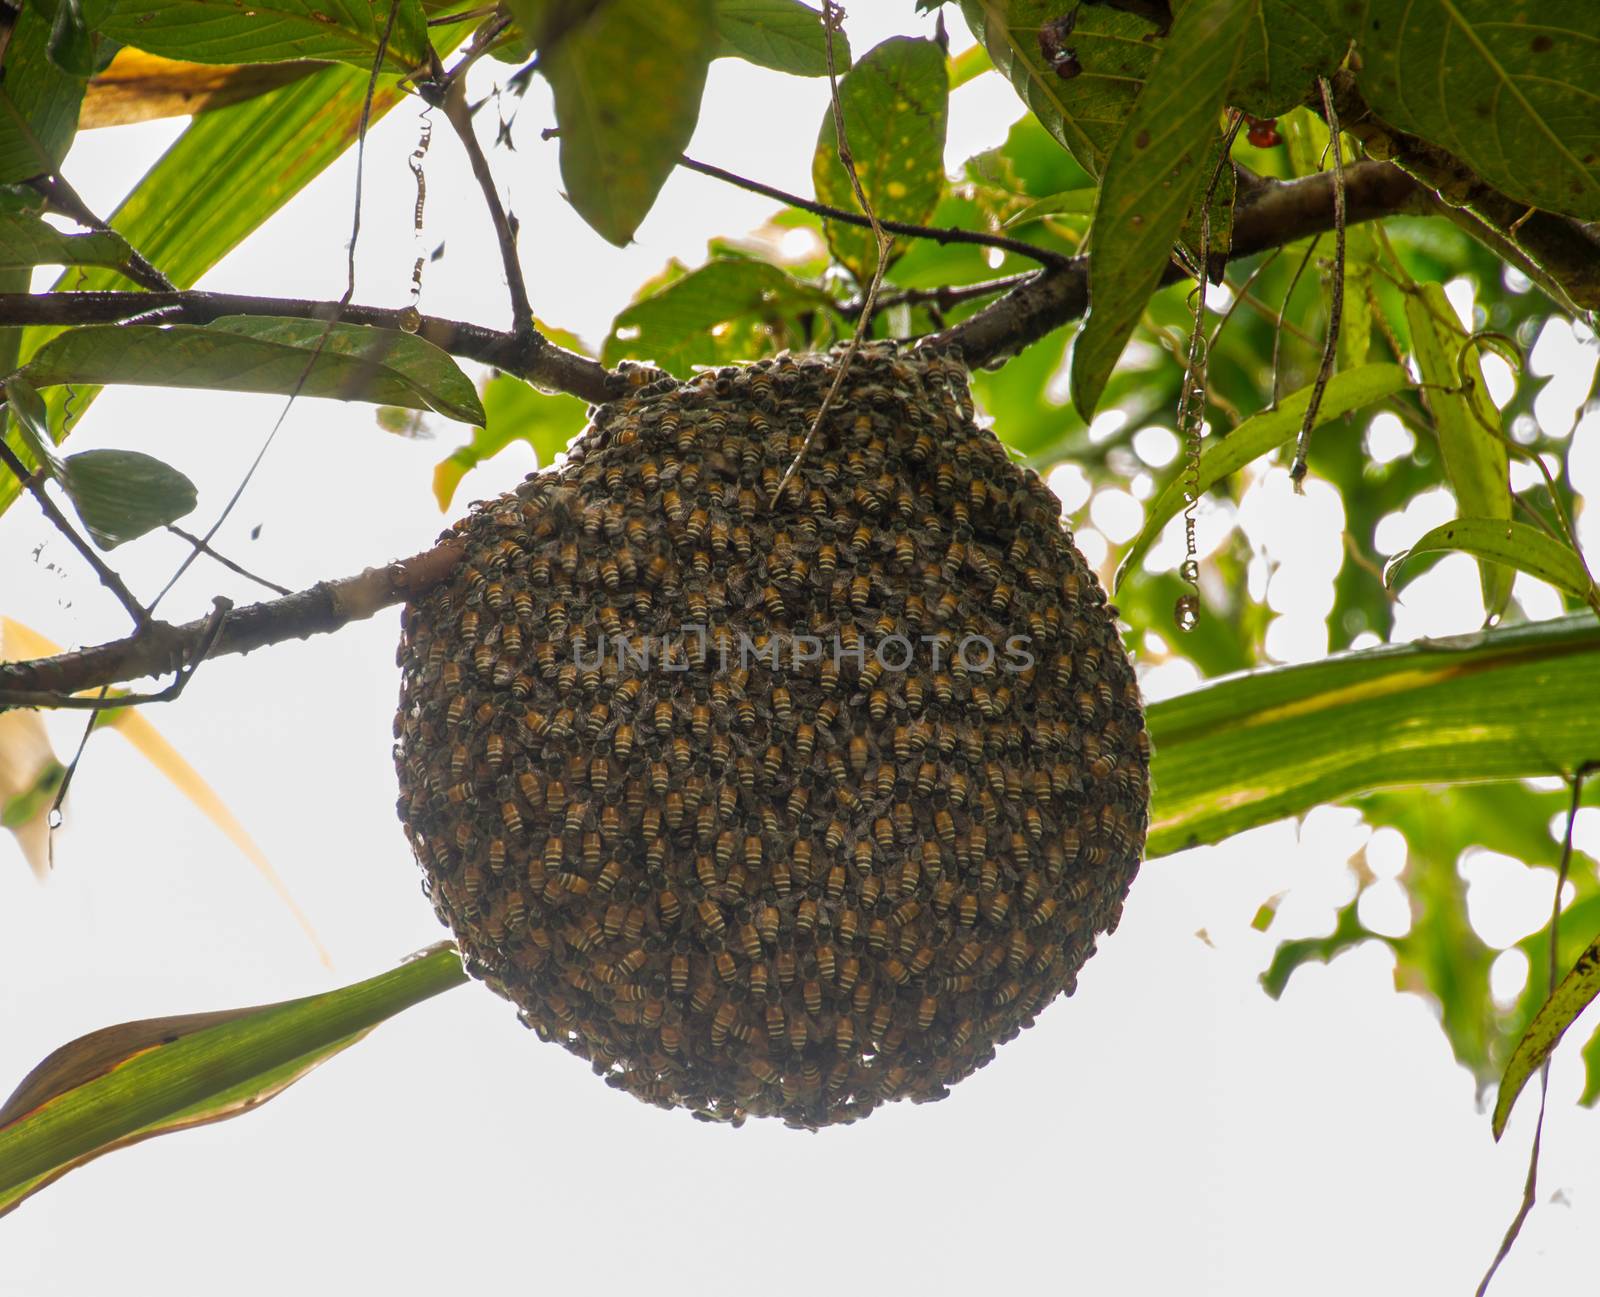 Honeybee swarm hanging on guava tree in nature after rainning by peerapixs